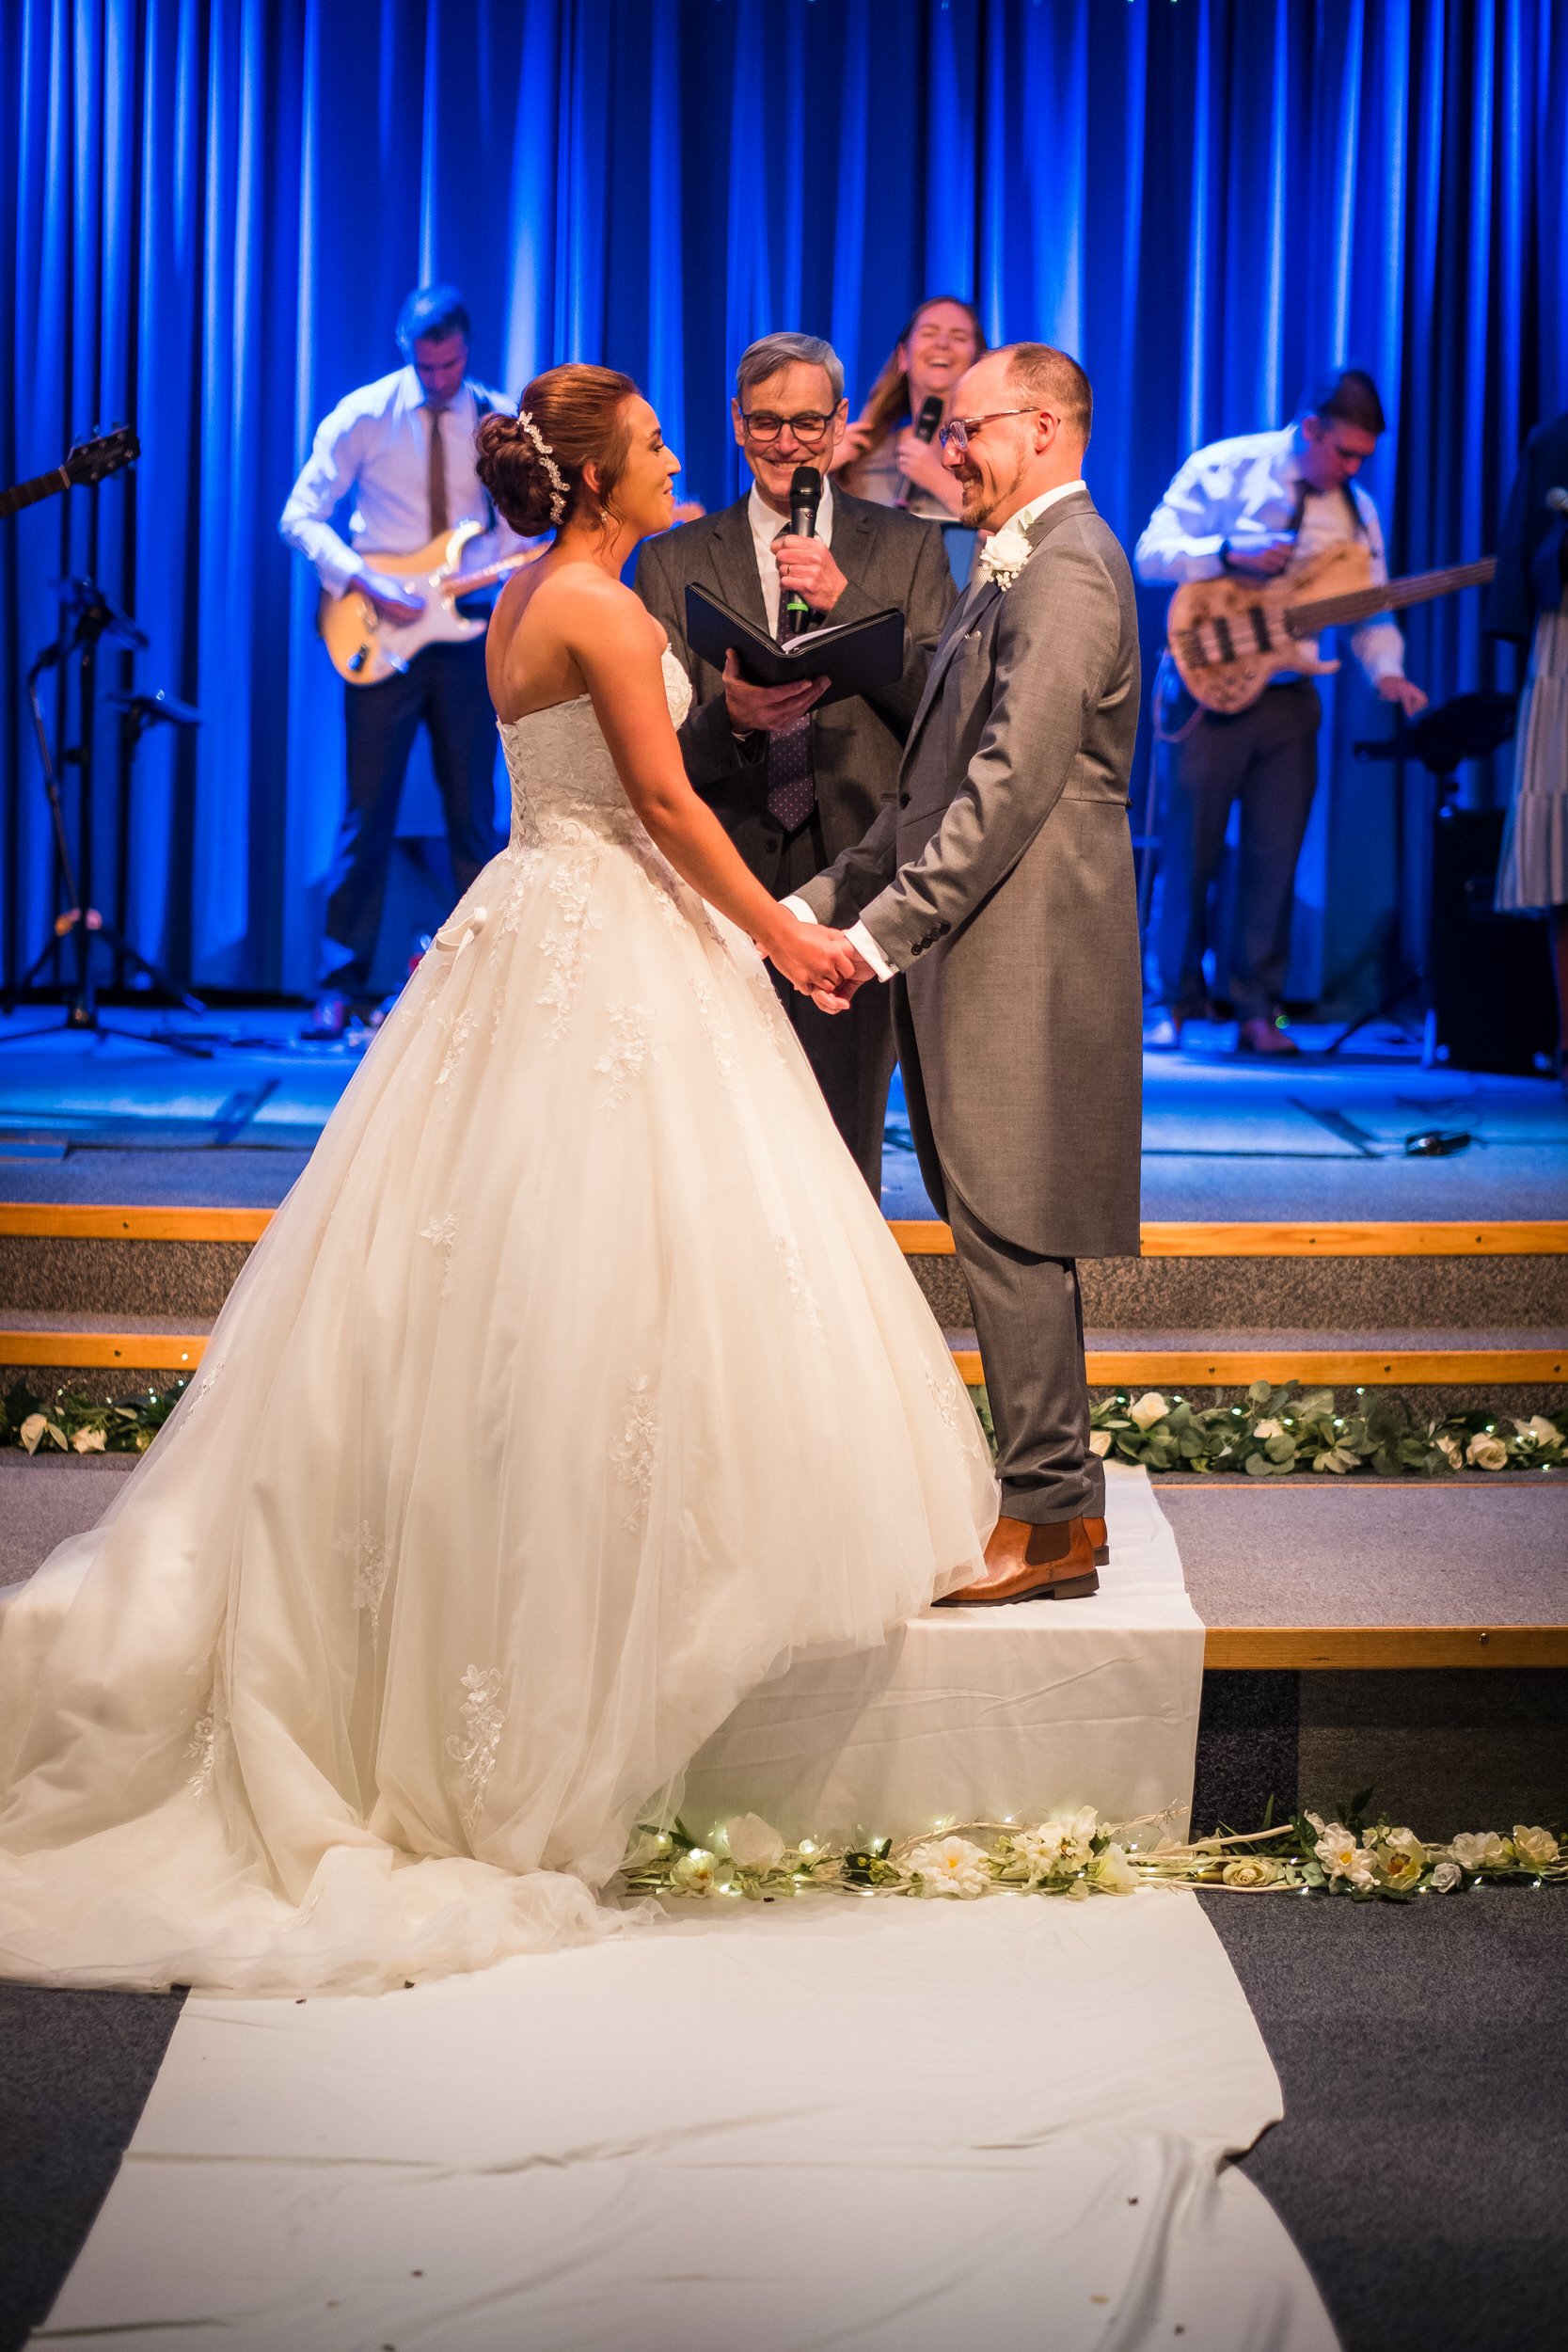 Bride and groom saying their vows | taylor wedding | wedding photography glasgow.jpg